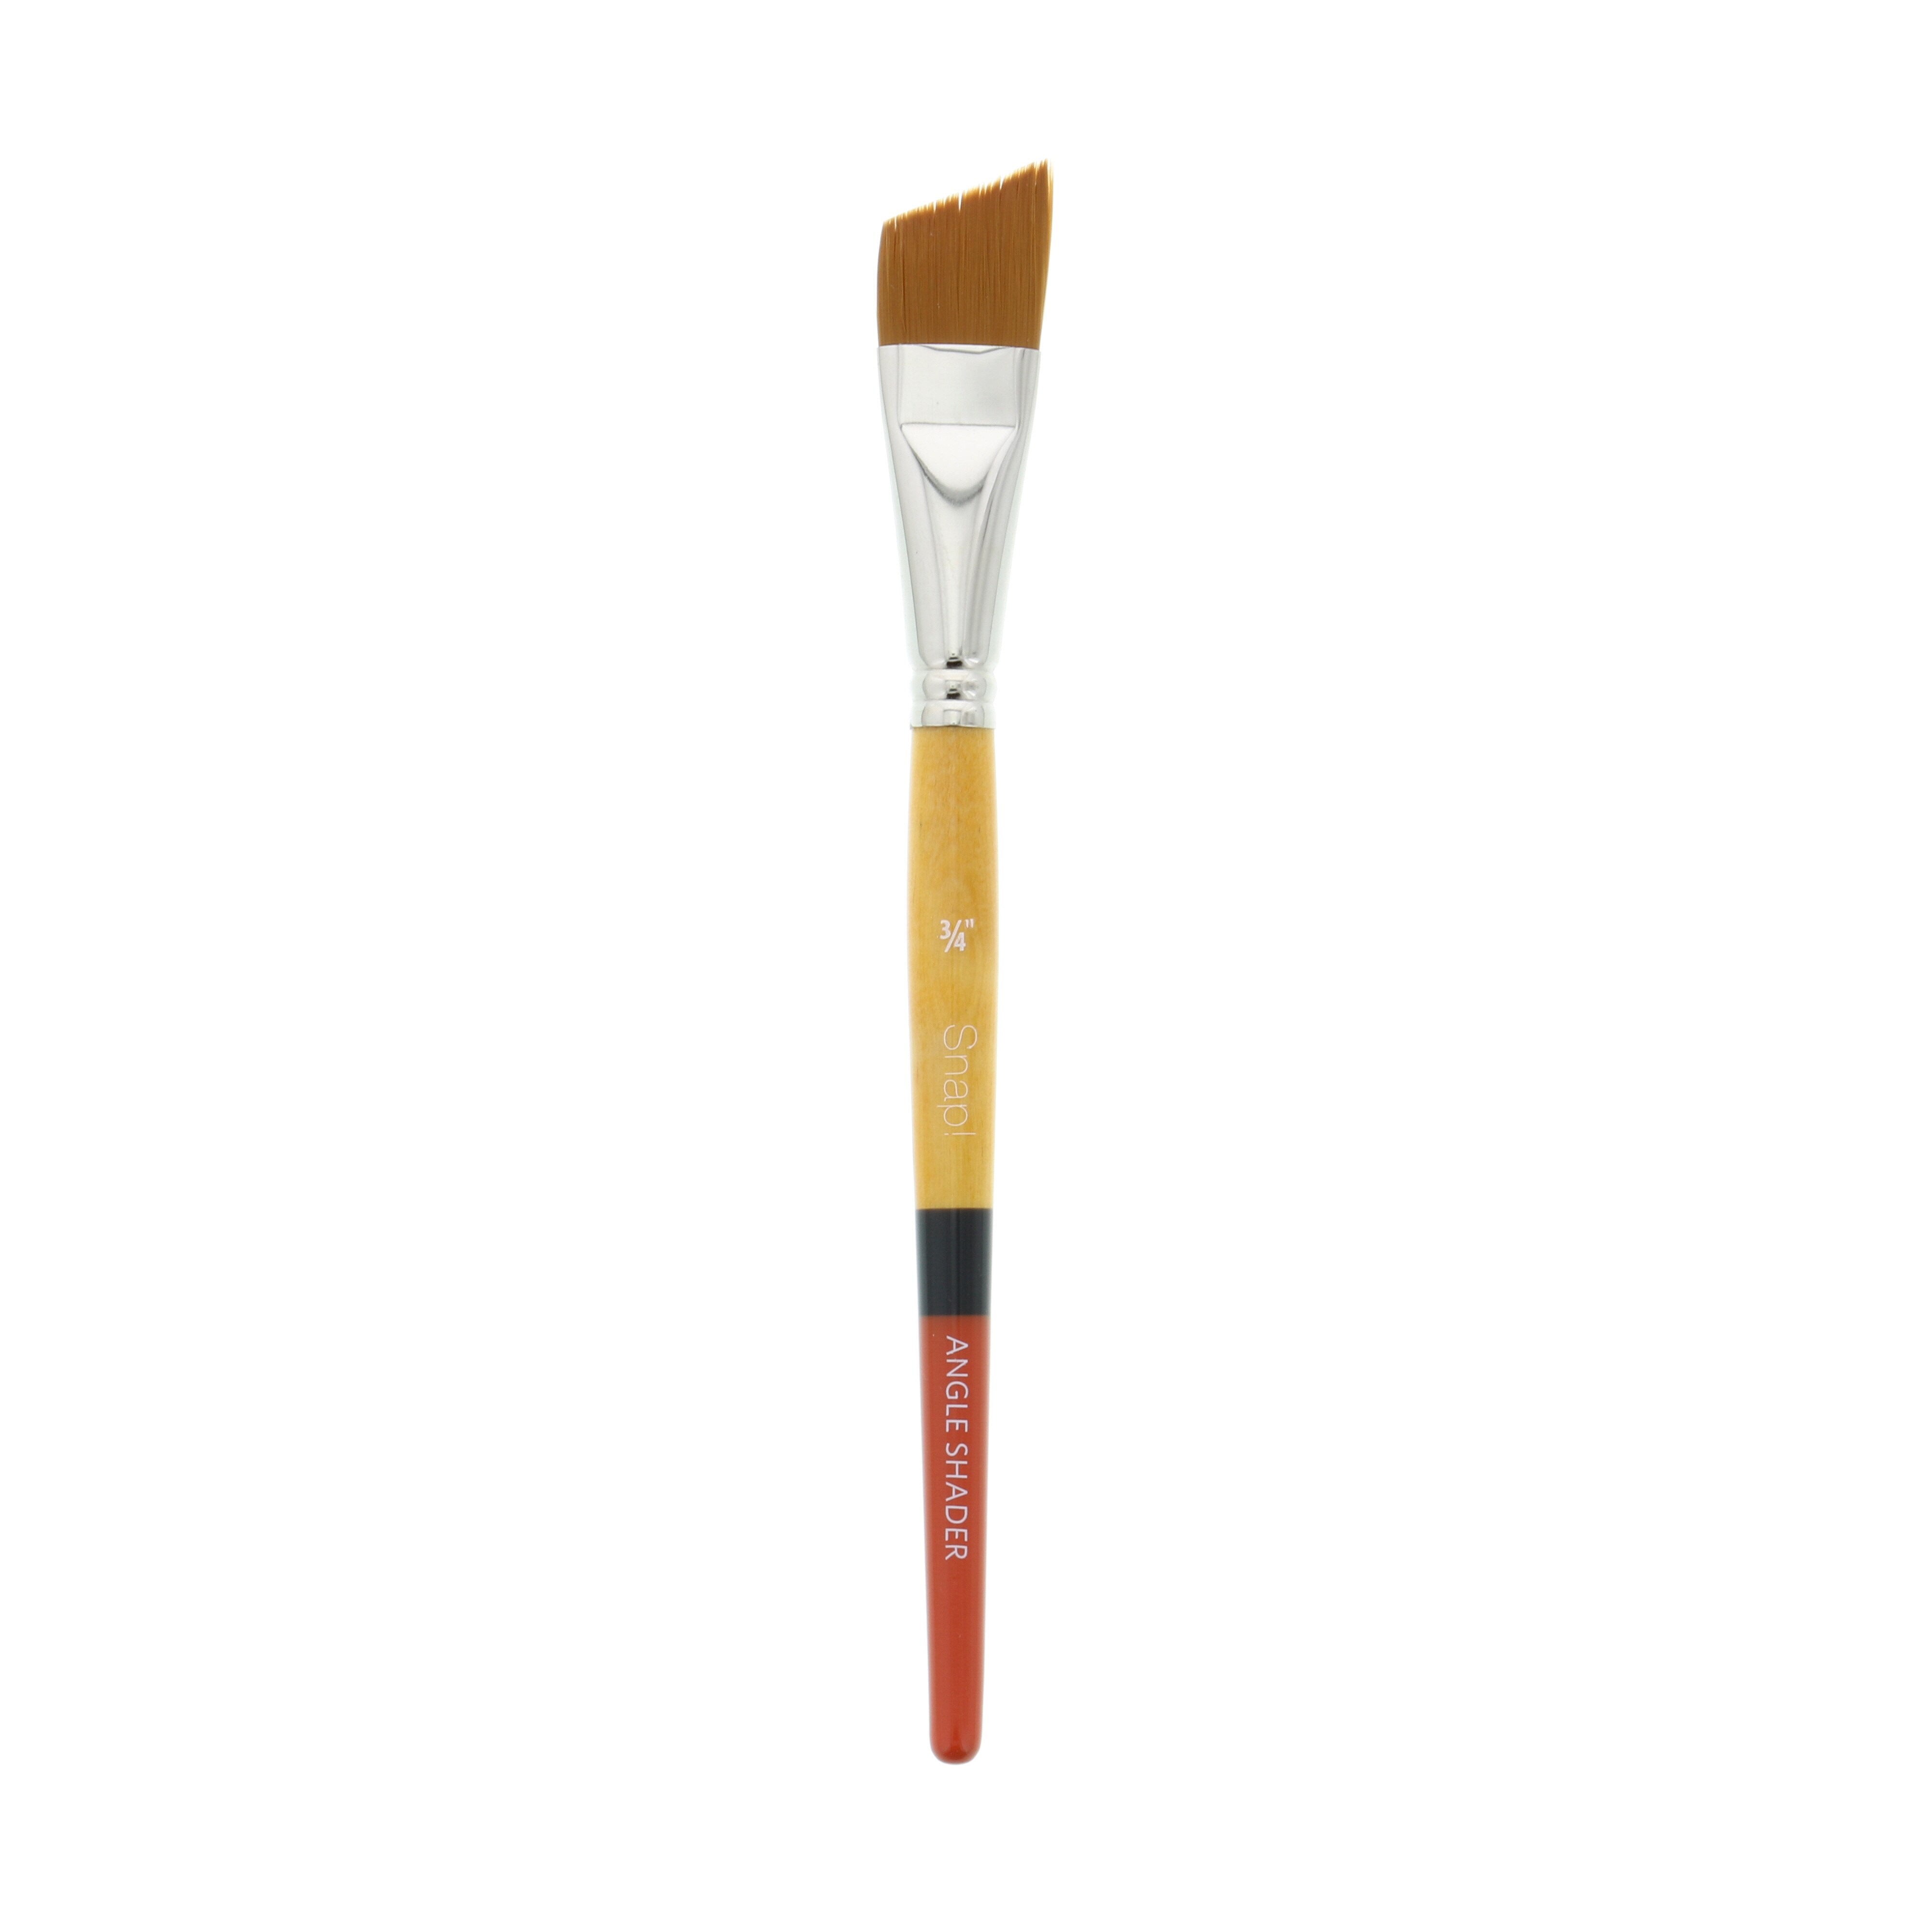 Princeton Brush Snap Gold Taklon Brush, Angle Shader, 3/4"